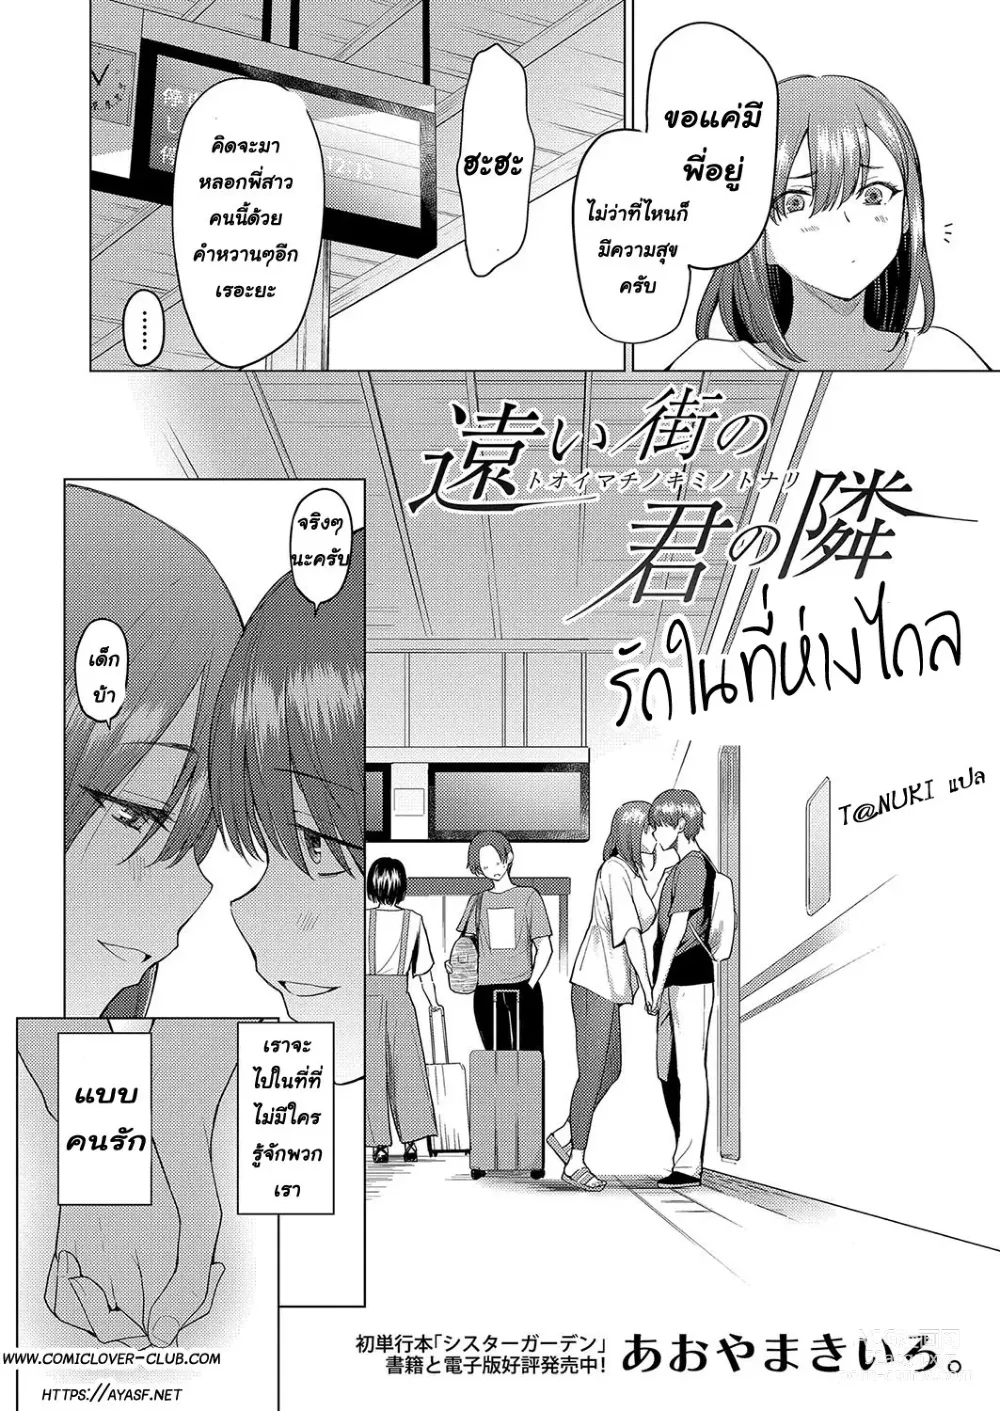 Page 2 of manga รักในที่ห่างไกล